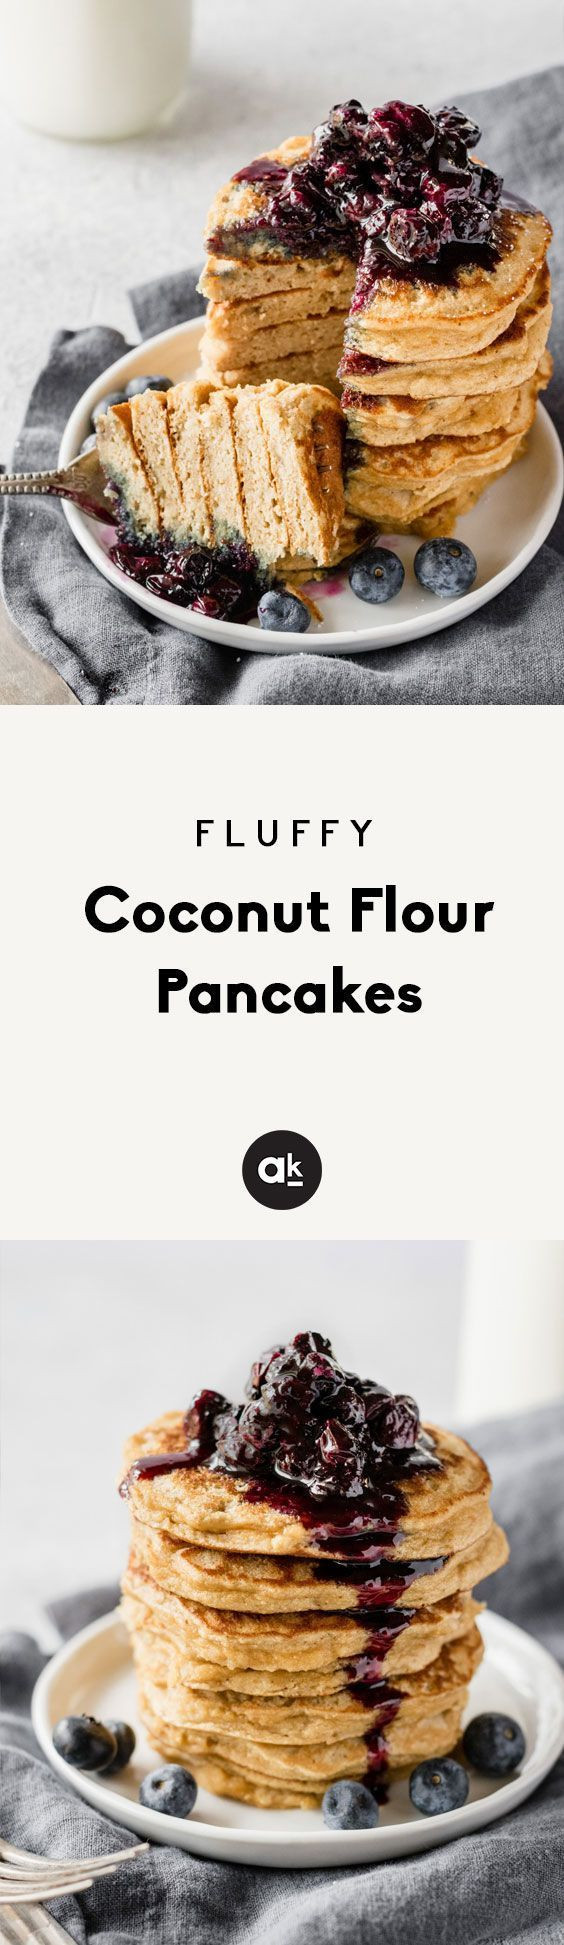 Paleo Banana Pancakes Coconut Flour
 The Best Fluffy Coconut Flour Pancakes